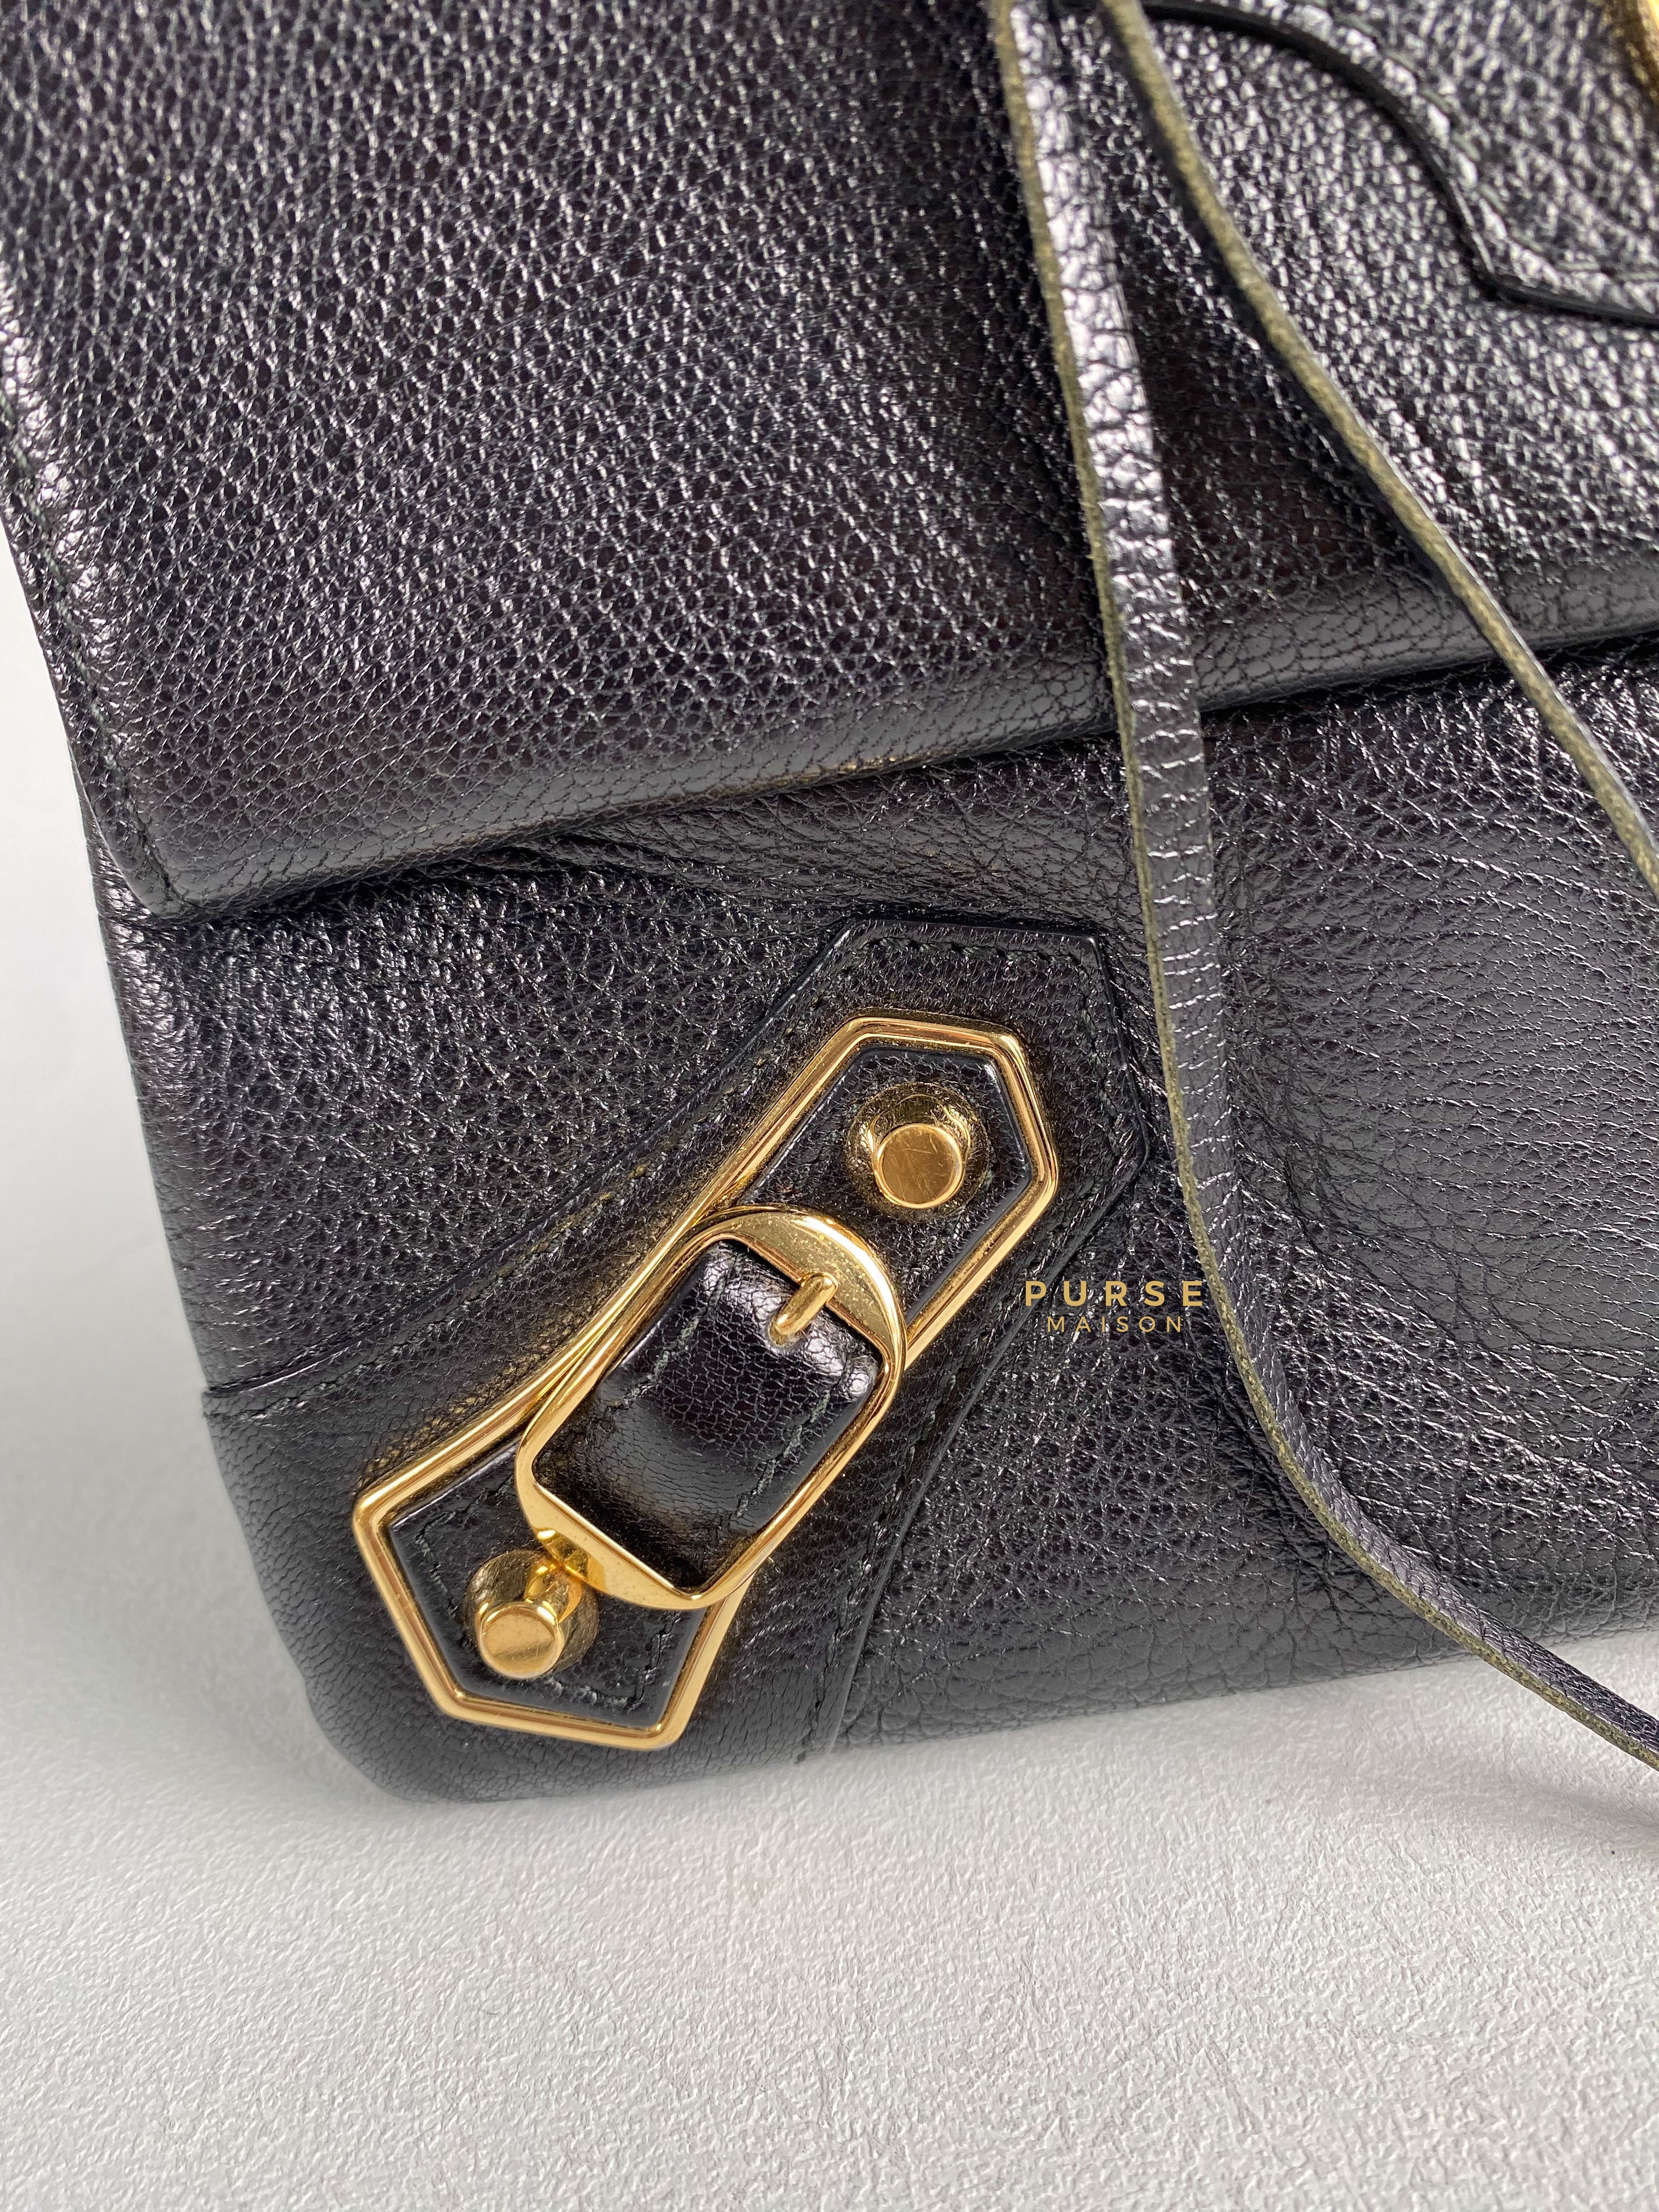 Balenciaga Metallic Edge Black Envelope Clutch with Strap | Purse Maison Luxury Bags Shop